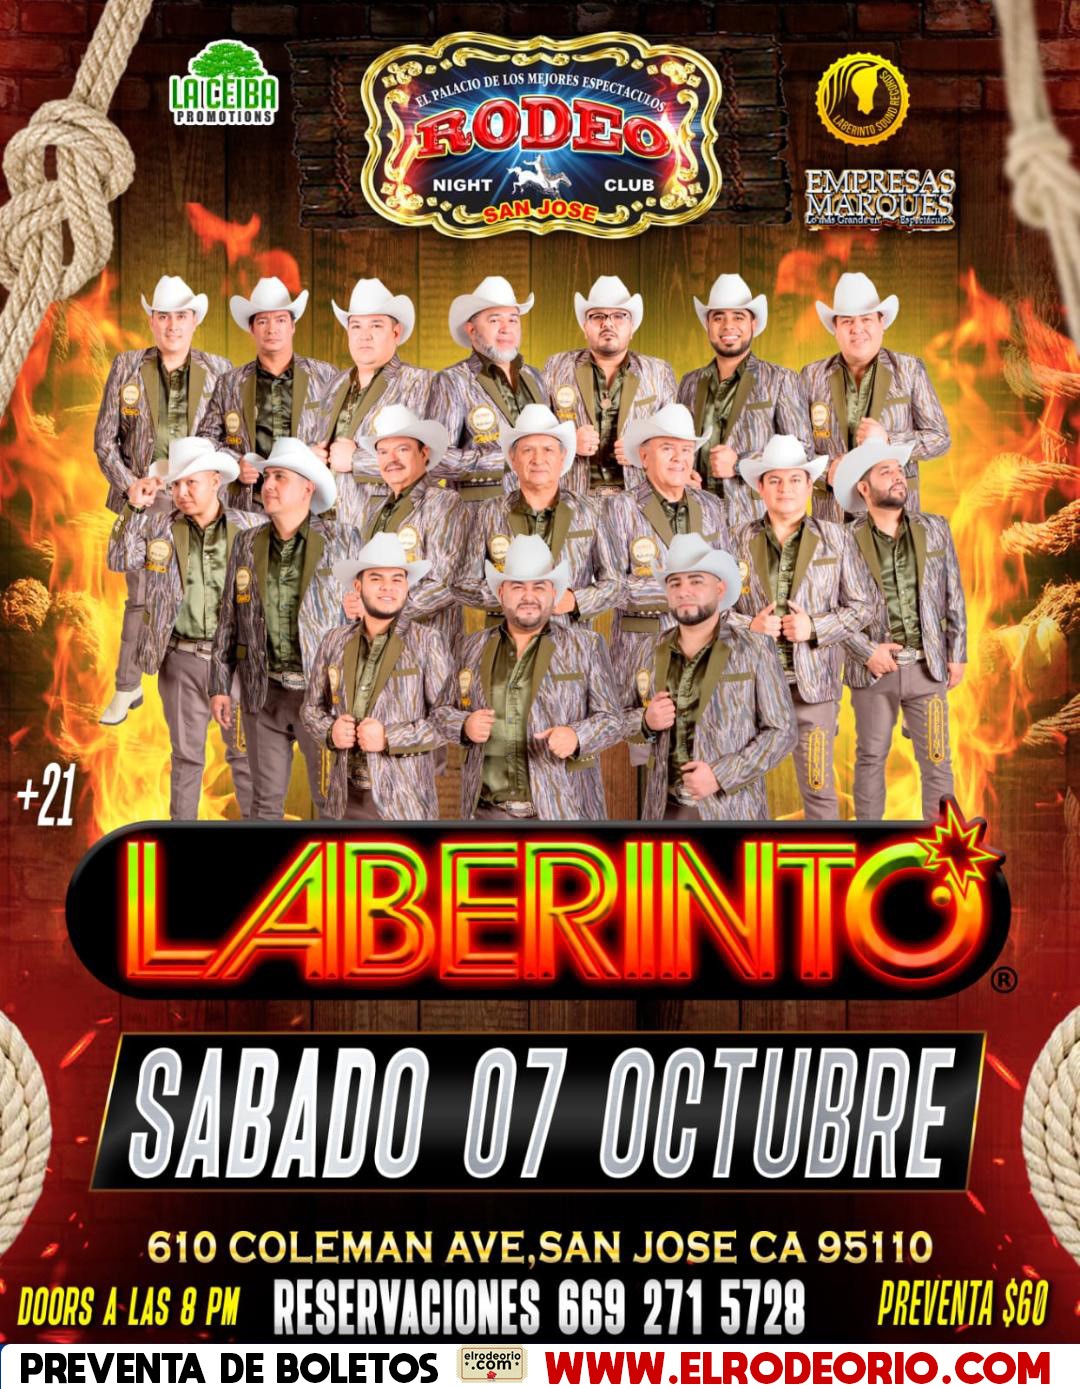 Grupo Laberinto,Sabado 7 de Octubre,Club Rodeo  on Oct 07, 21:00@Club Rodeo - Buy tickets and Get information on elrodeorio.com sanjoseentertainment